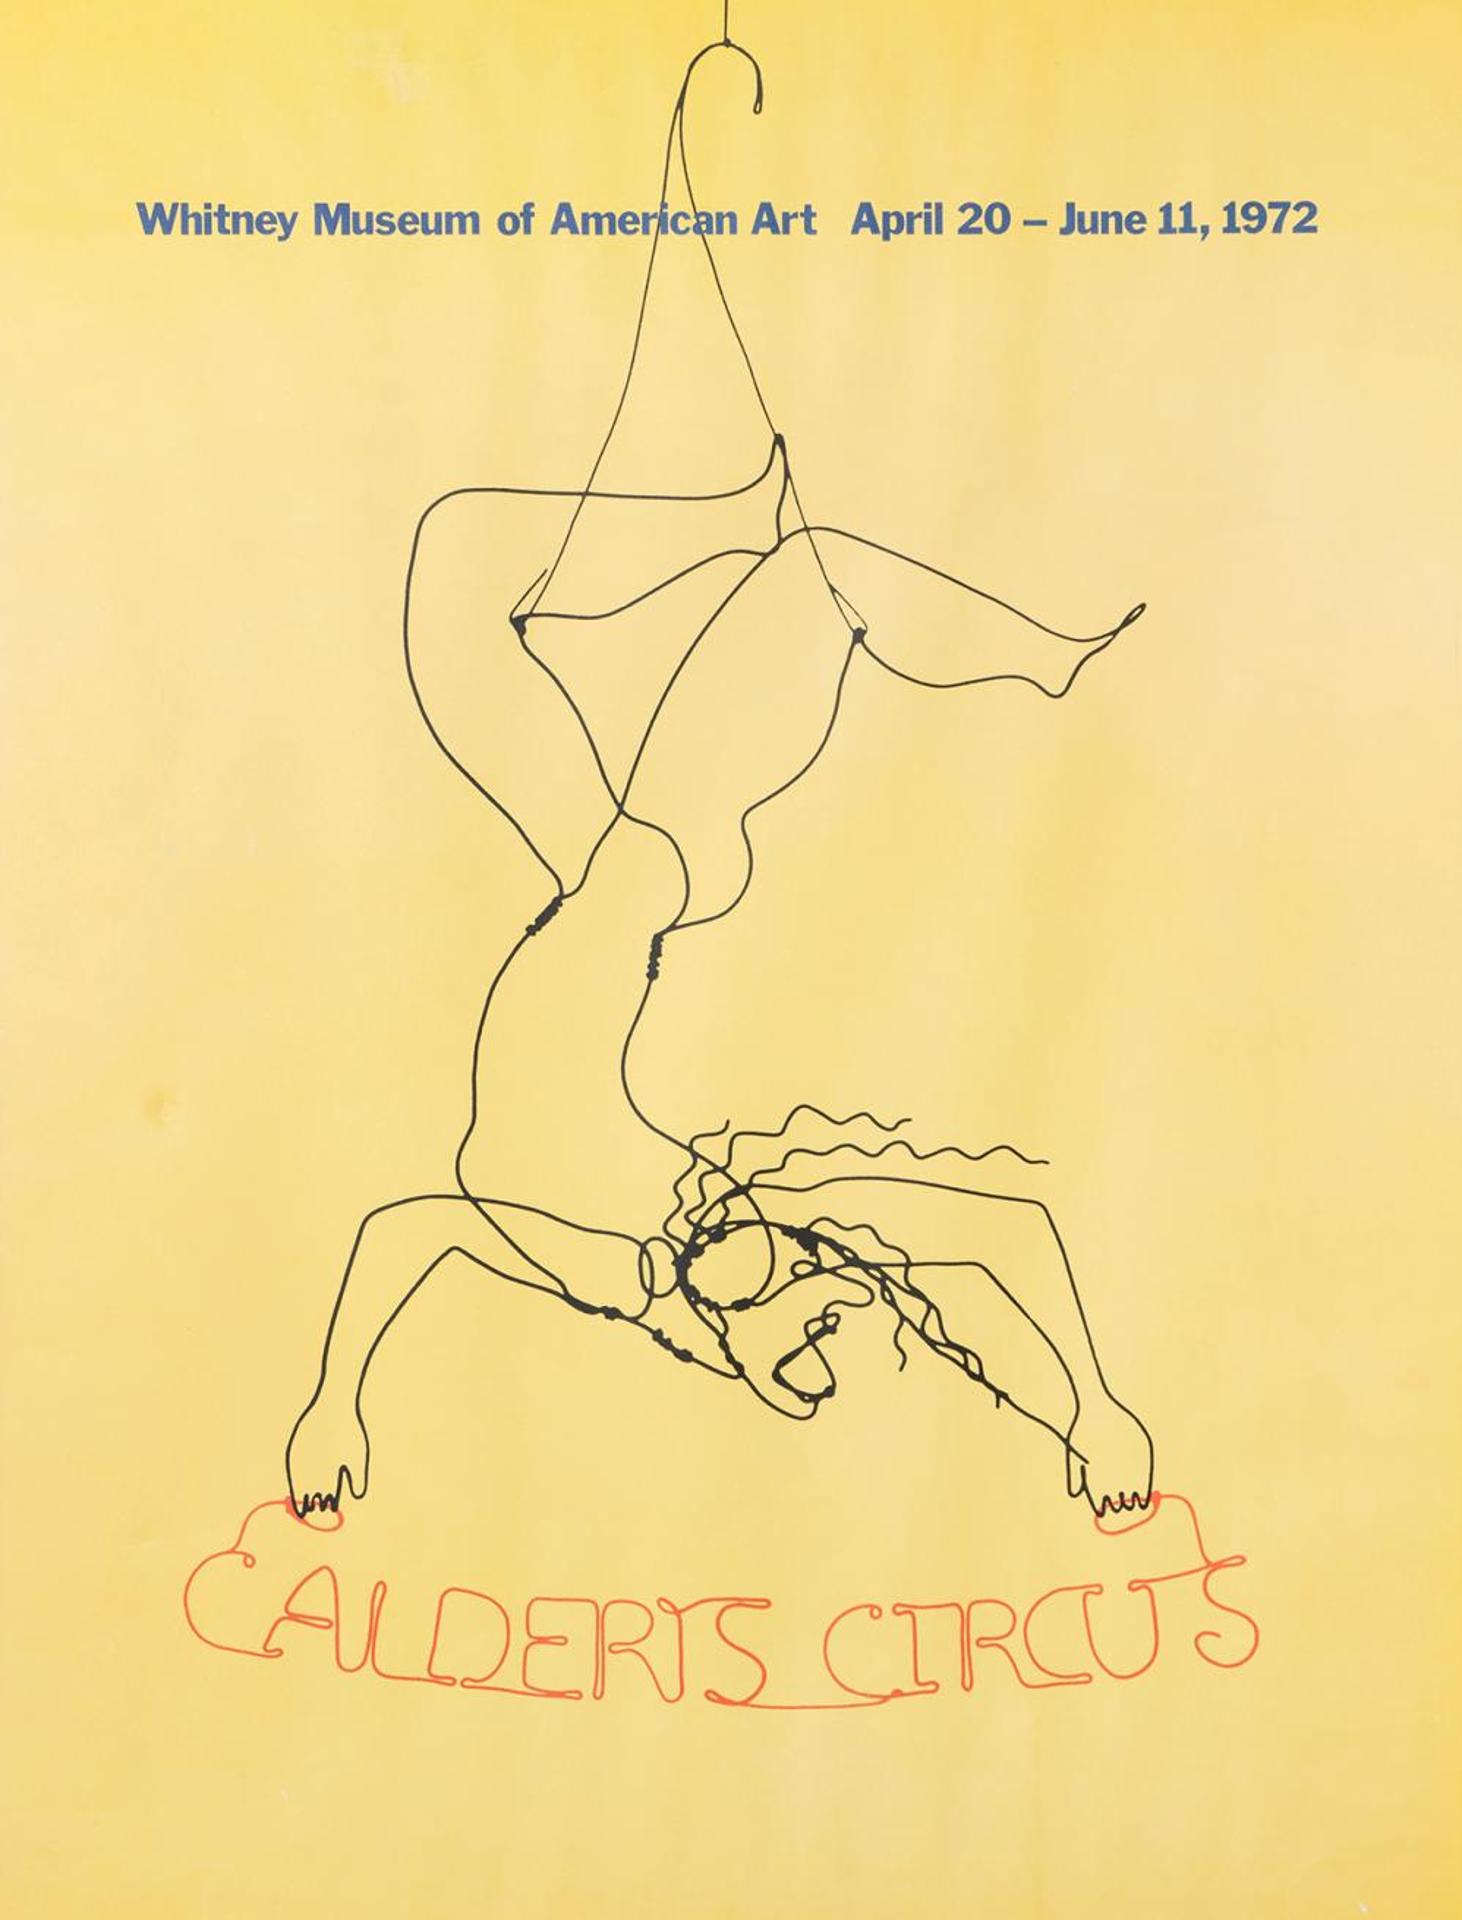 Alexander Calder (1898-1976) - Calder's Circus